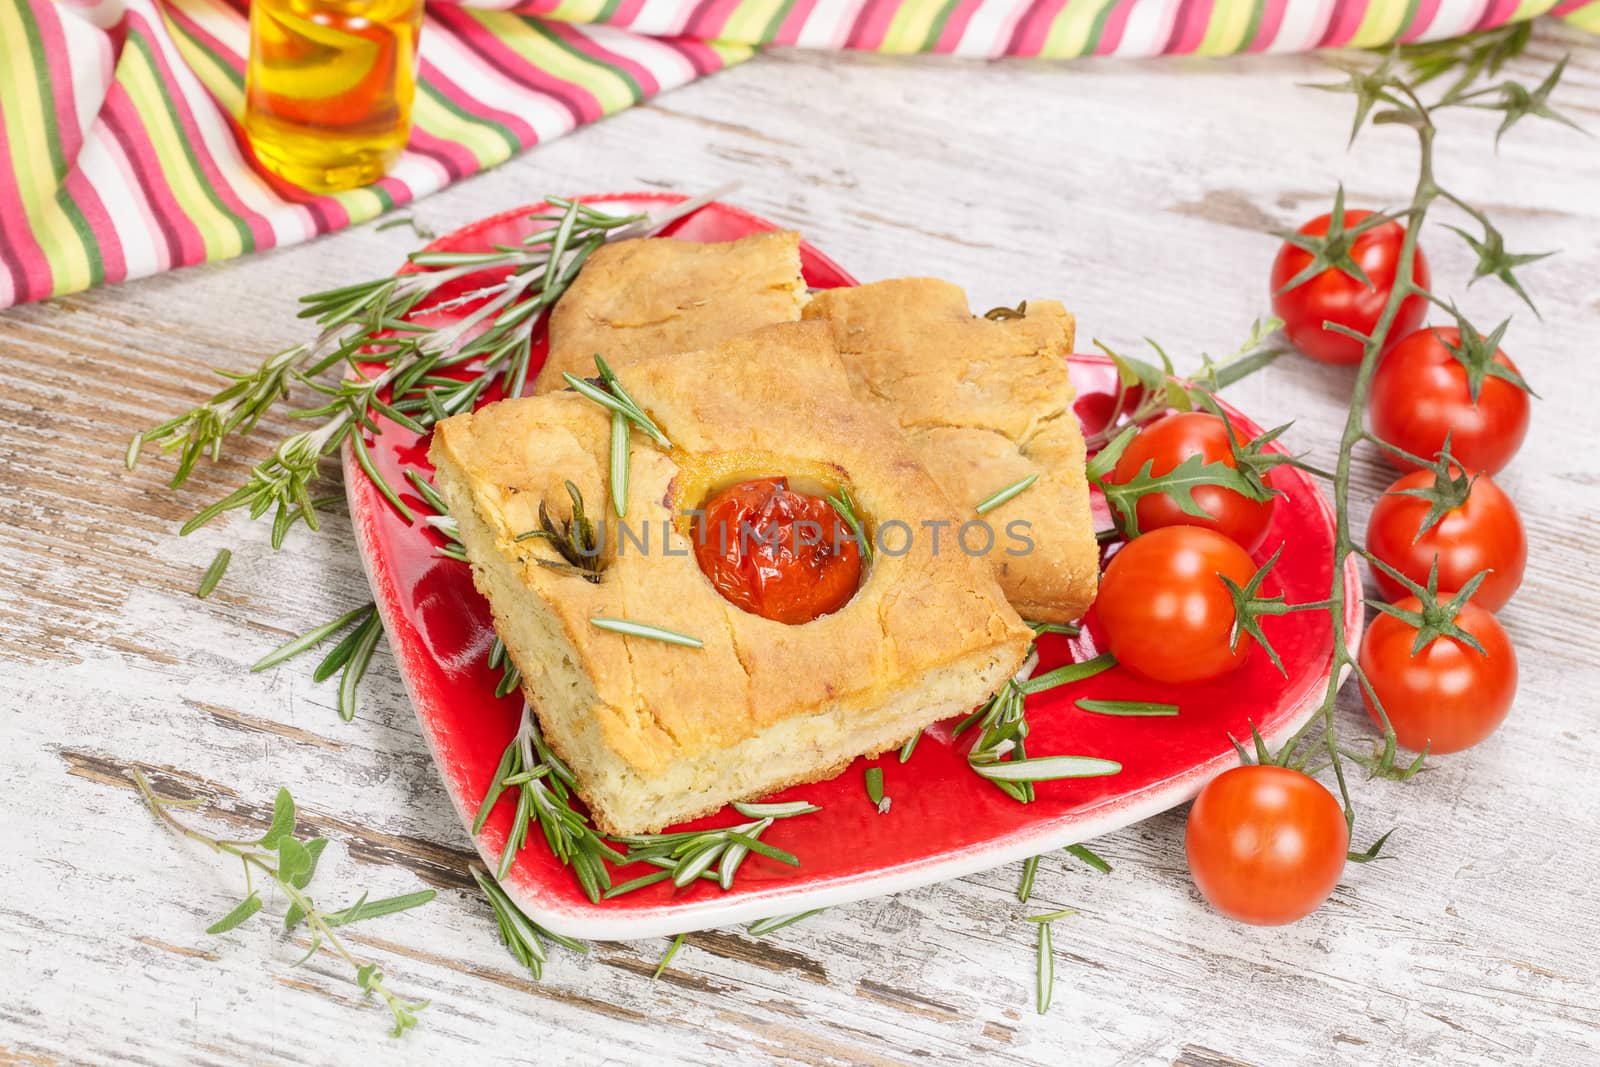 Focaccia italian bread slices with tomato and rosemary.